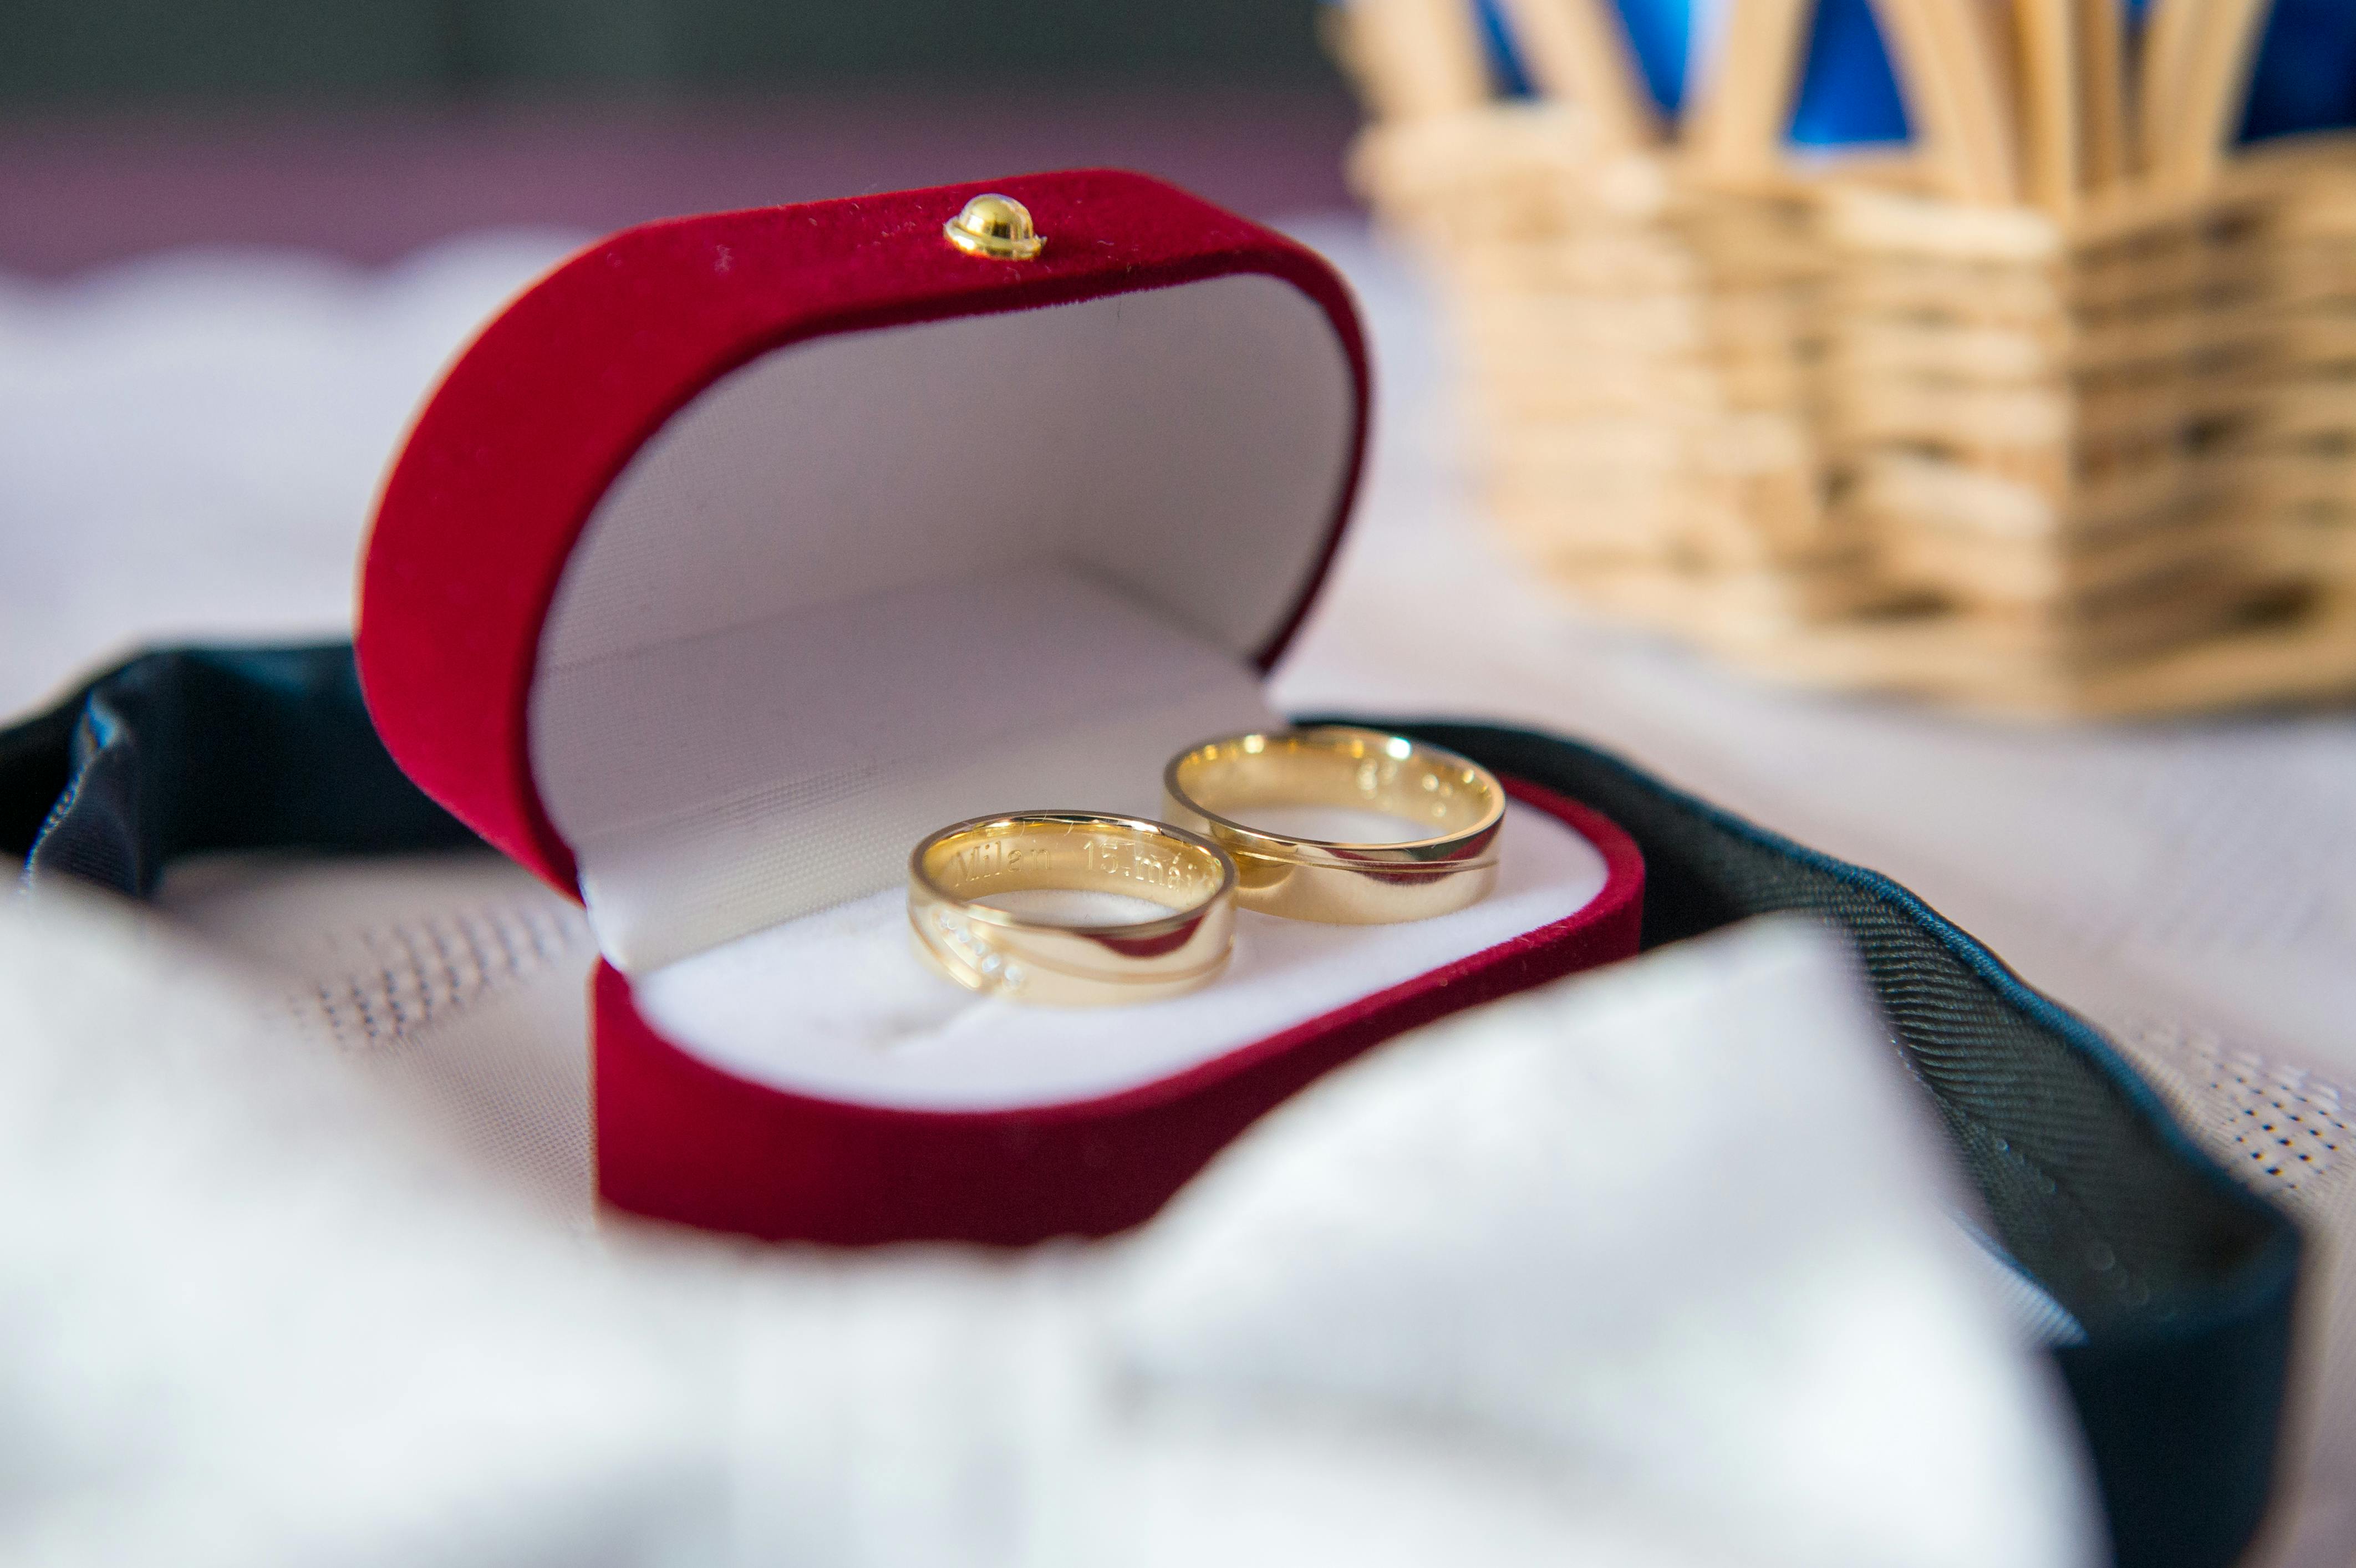 Kohl's City Rox Gold Tone Ring Size 8 Women's Costume Jewelry In Original  Box | eBay